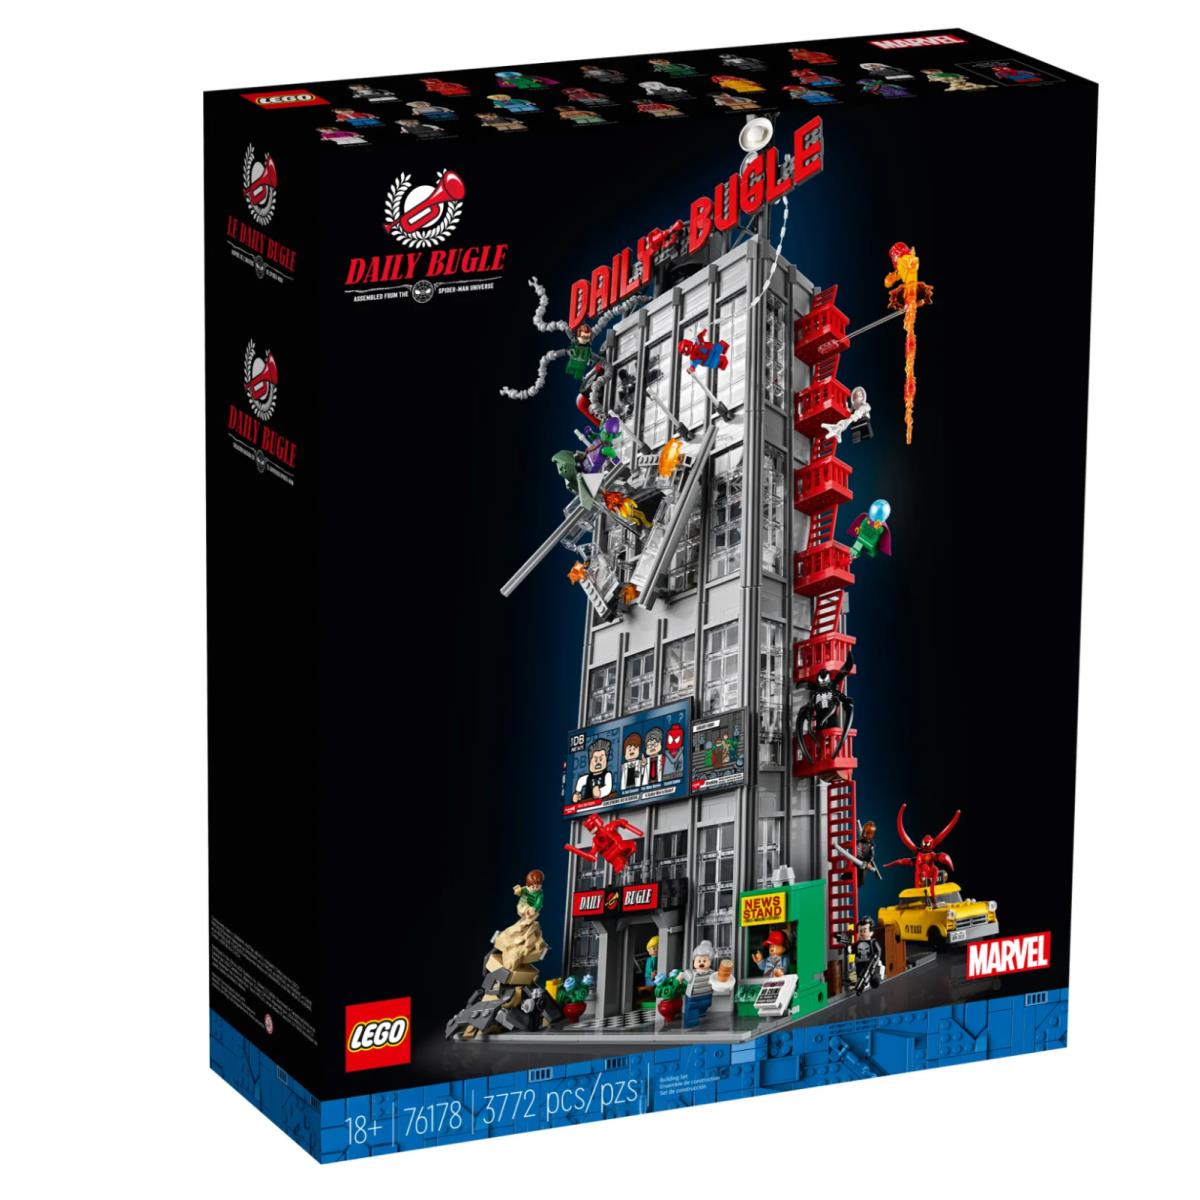 Lego Marvel Super Heroes Daily Bugle 76178 Building Kit 3772 Pcs Exclusive Set